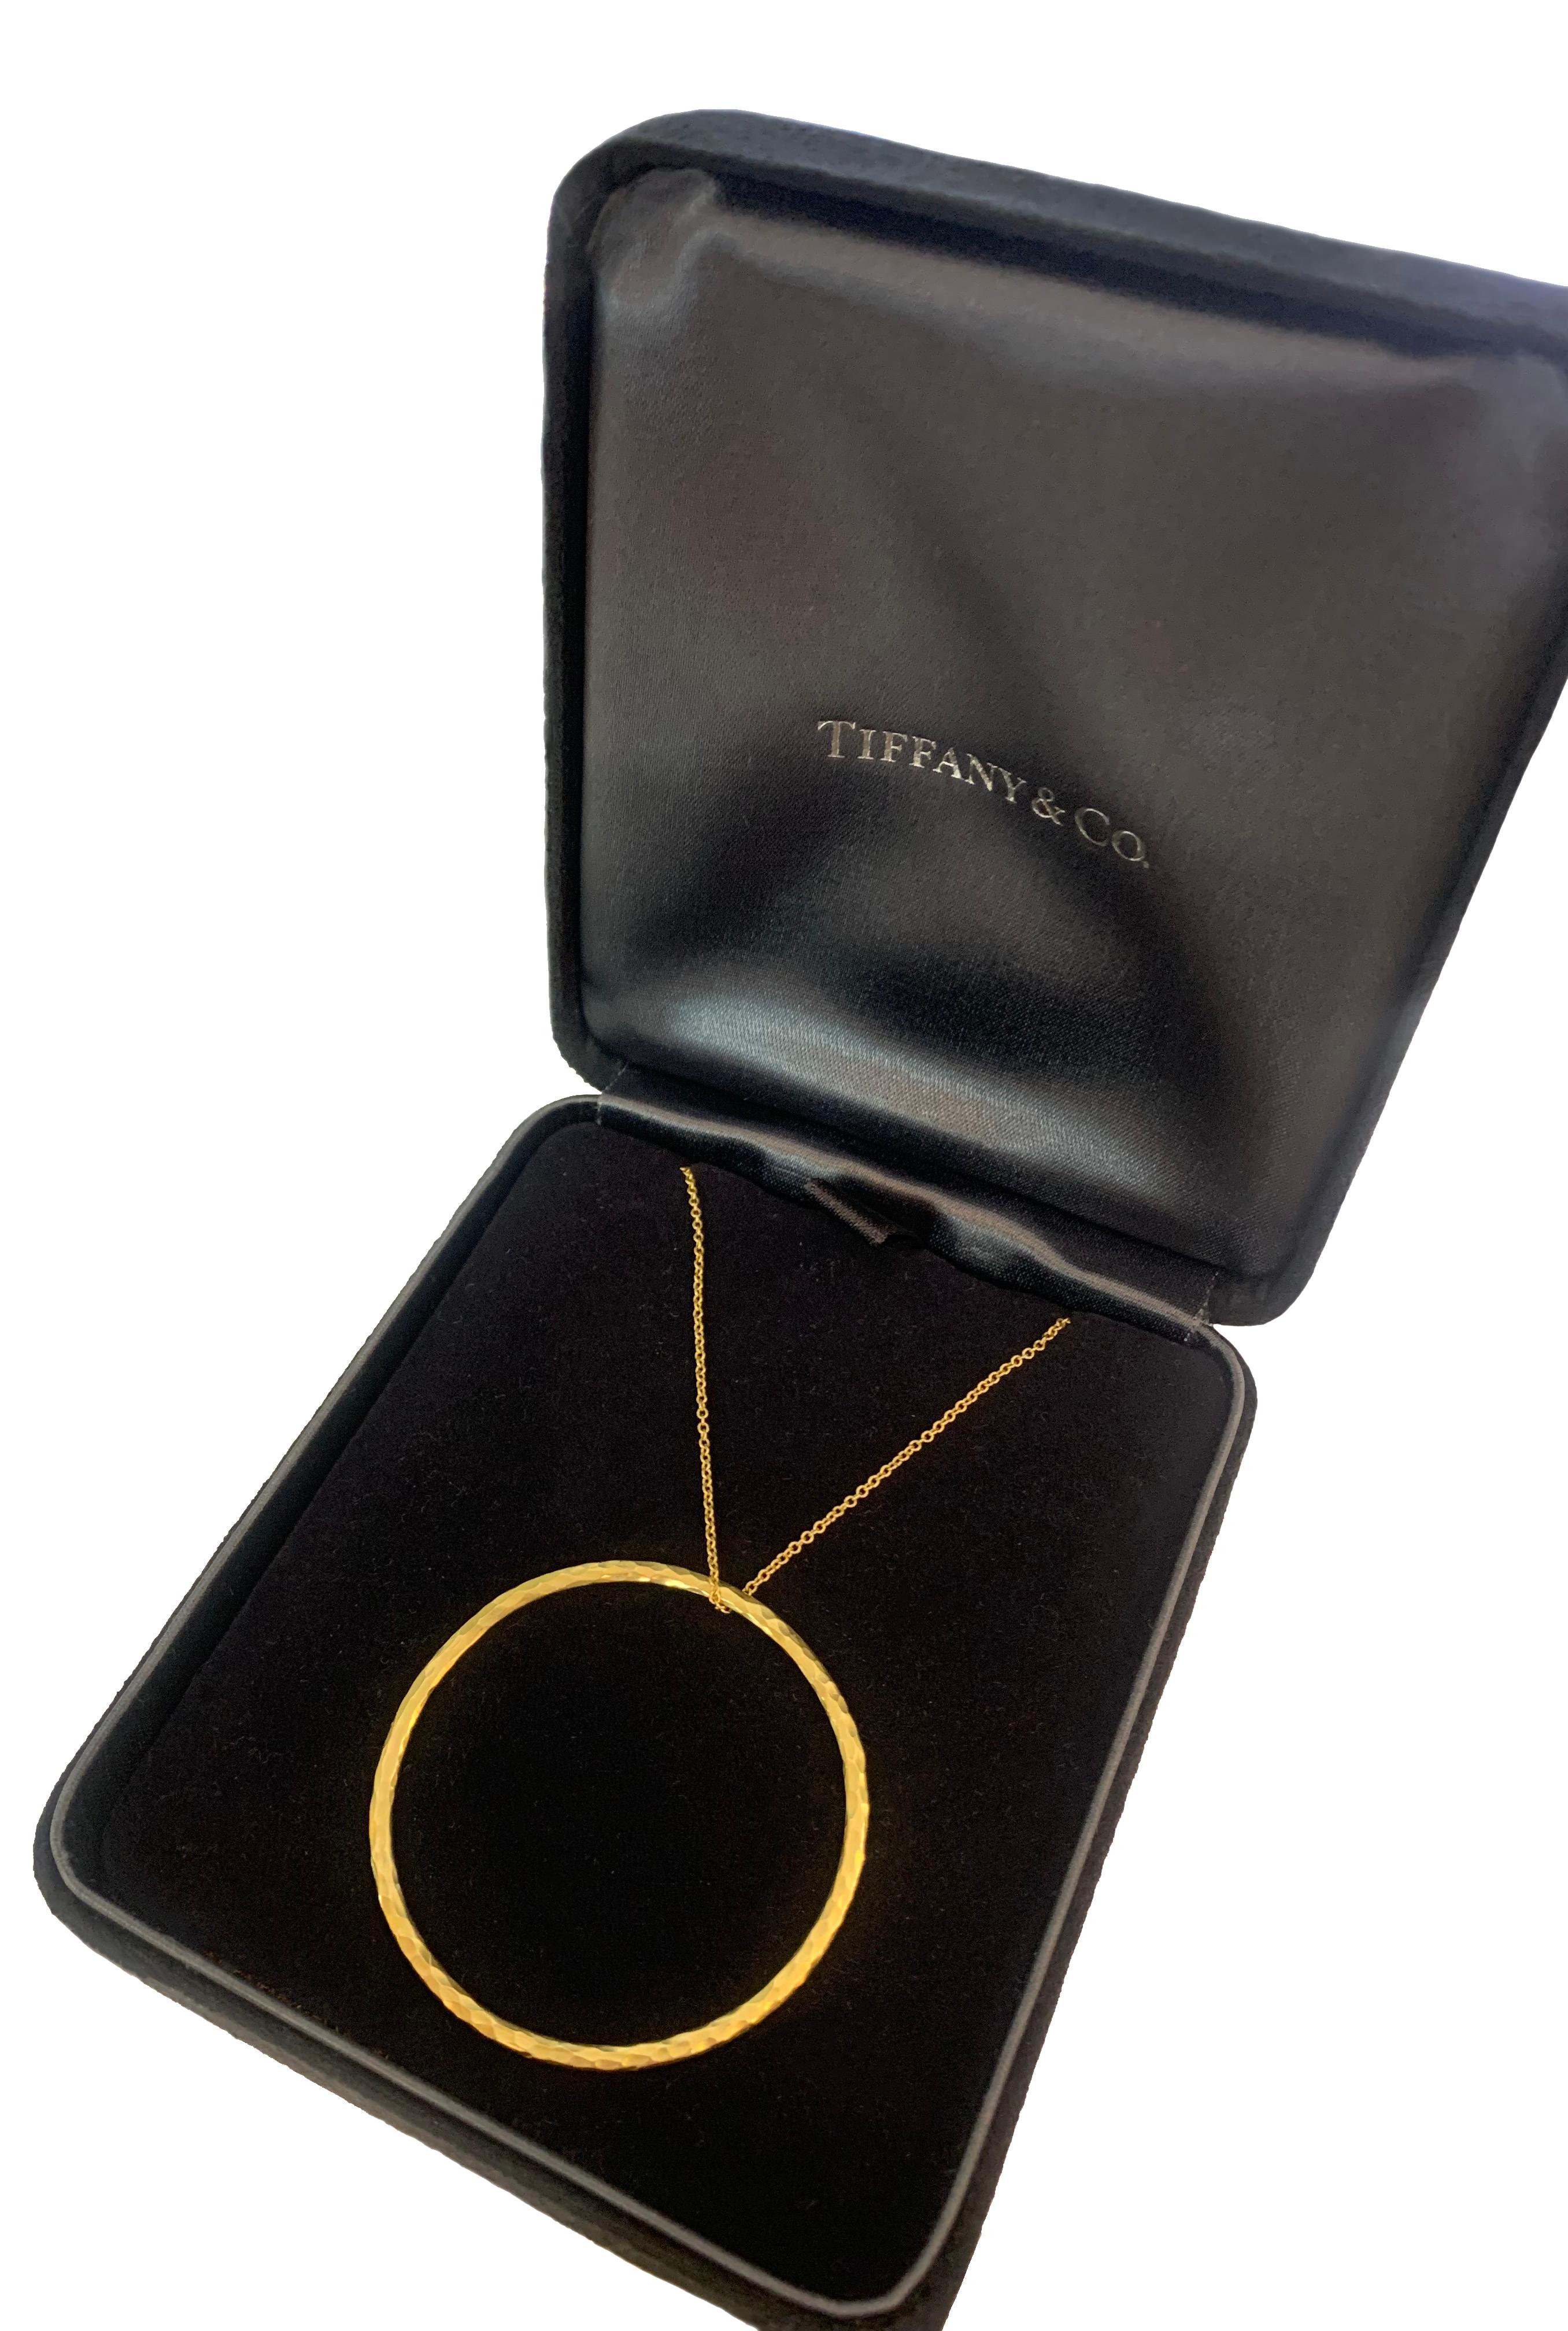 tiffany circle pendant gold